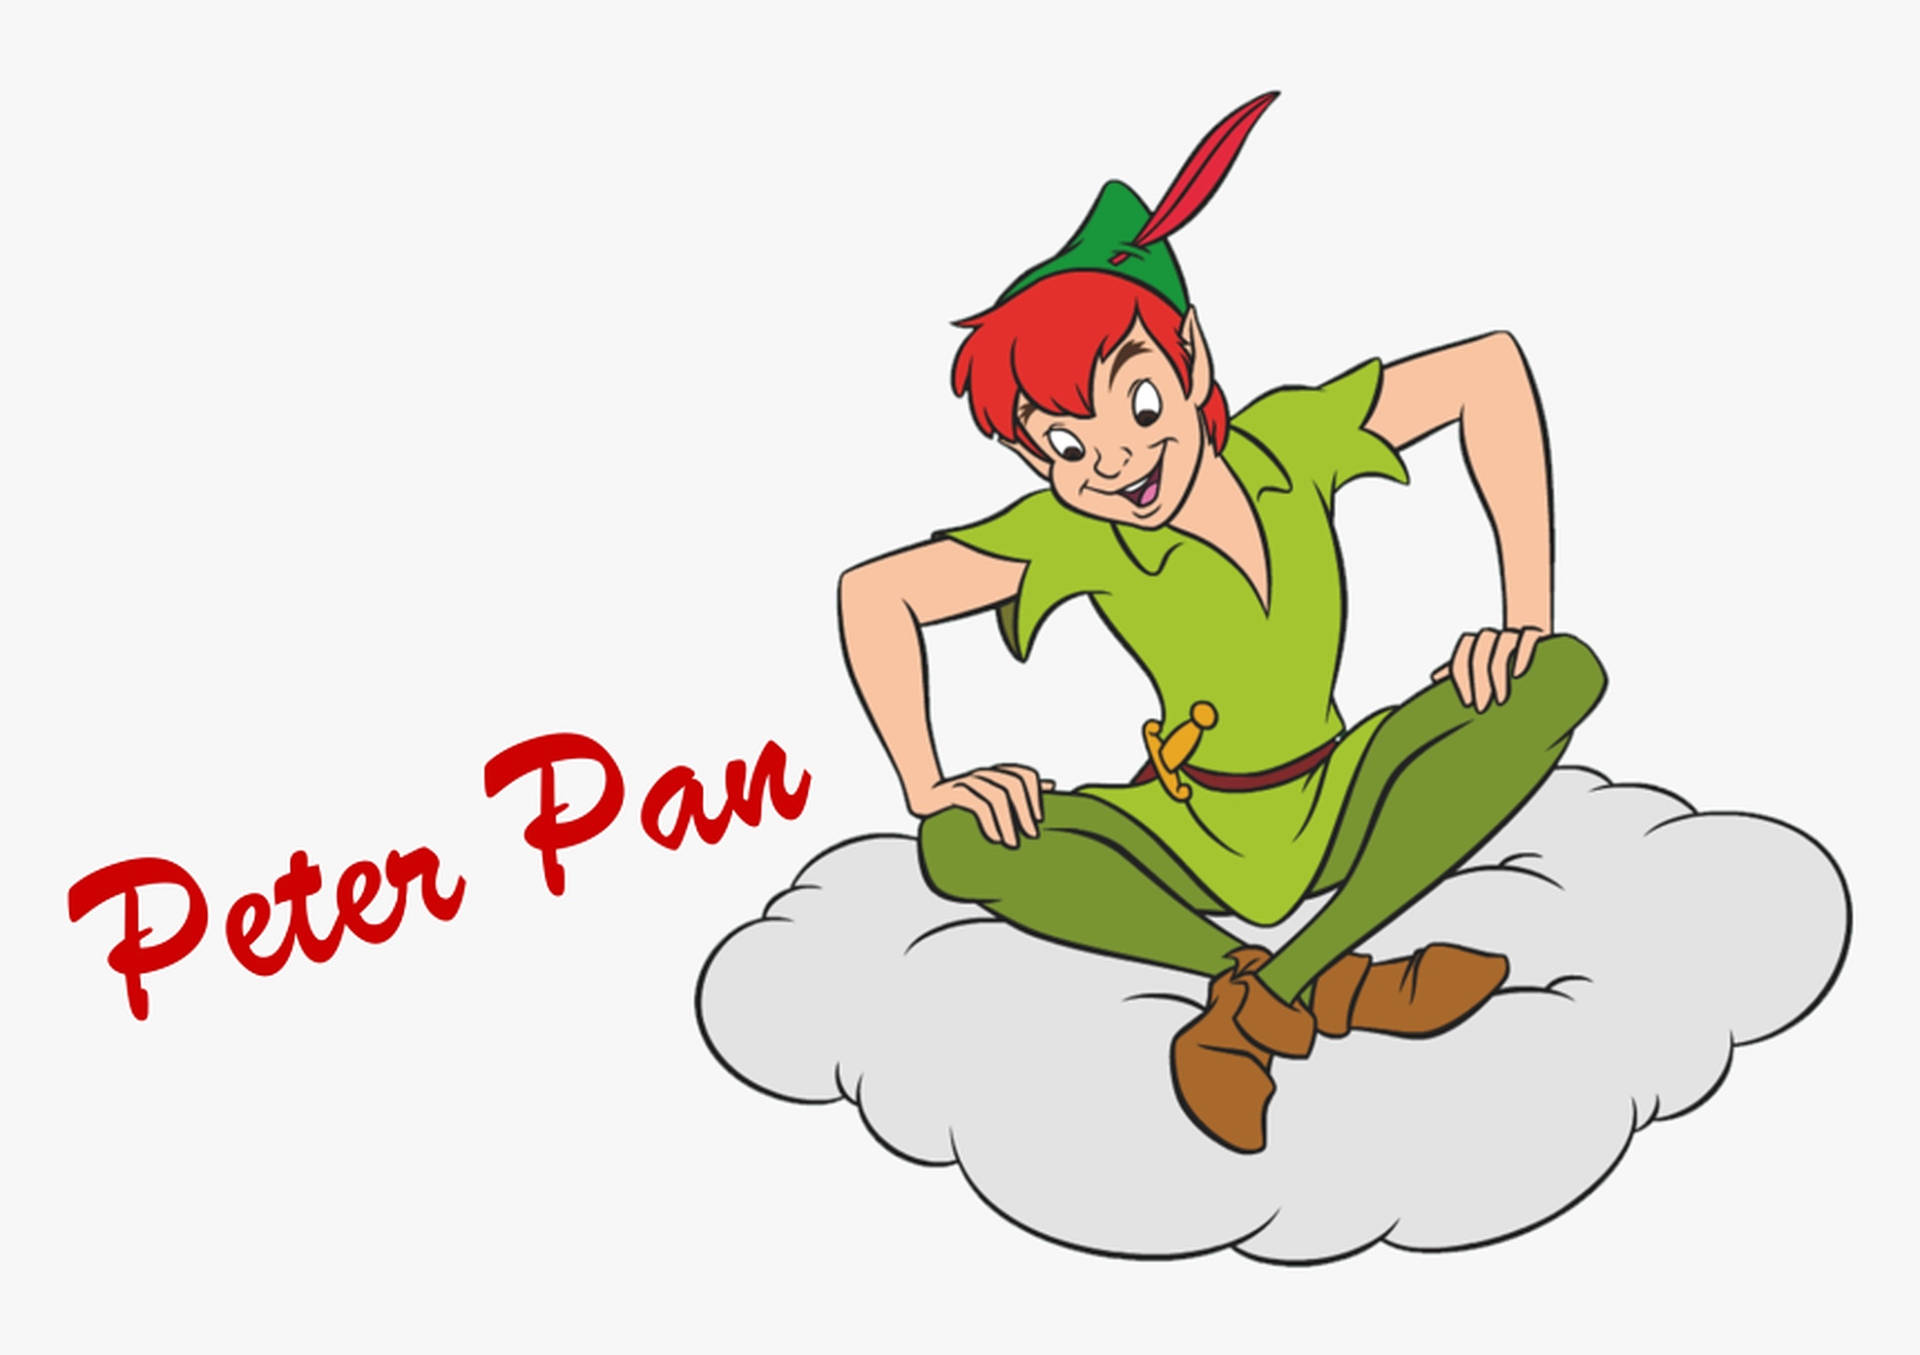 Pan by Стикеры